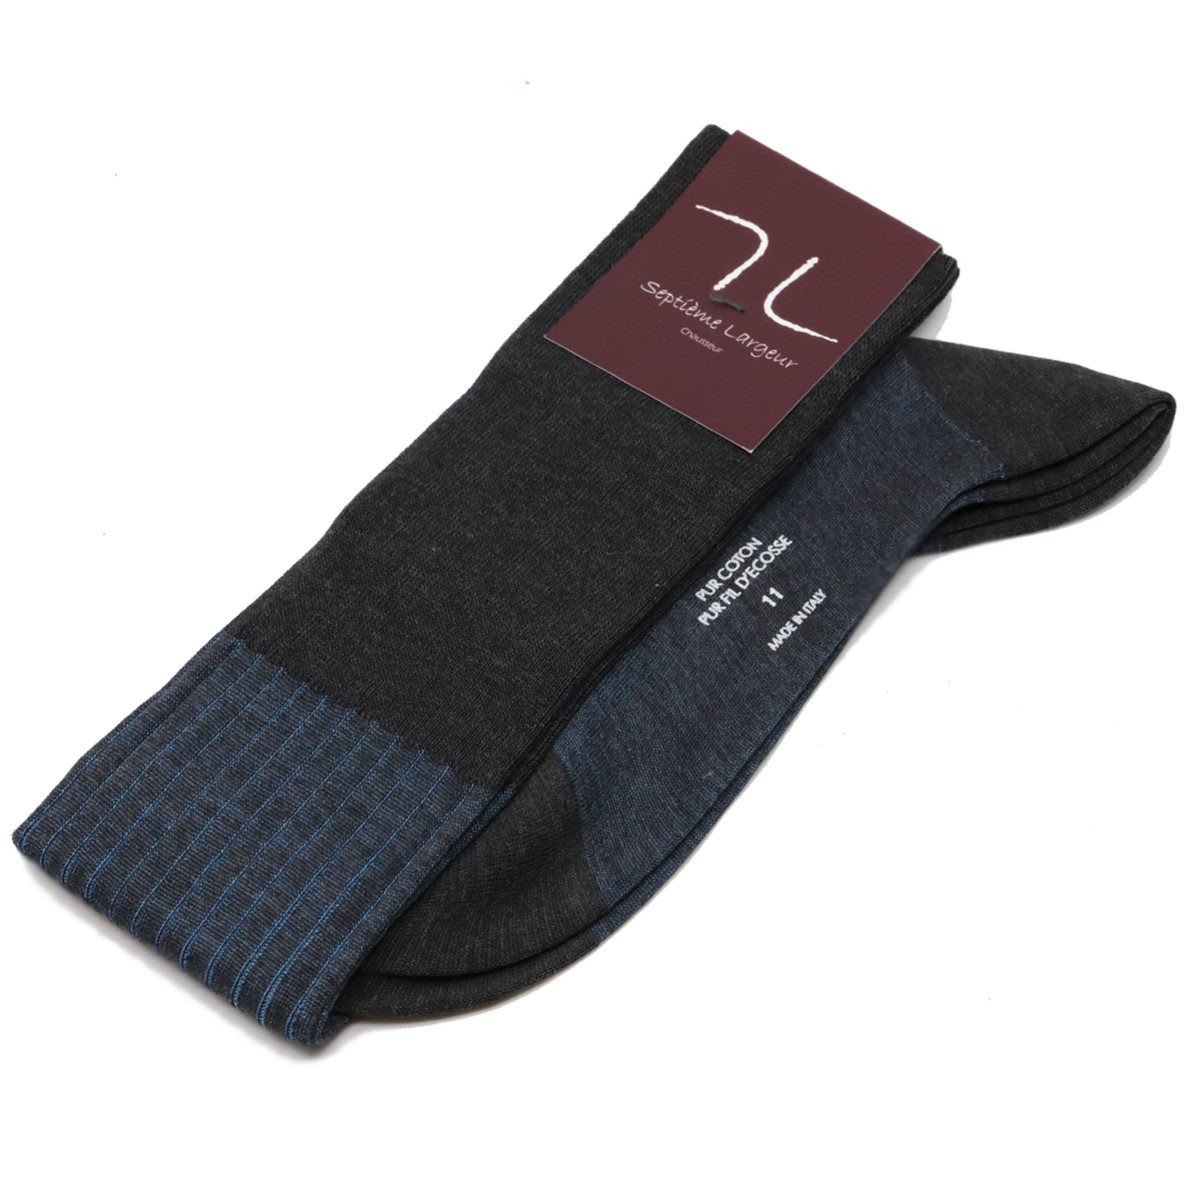 ACCESSORIES socks : dark grey / light blue Long socks | Septième largeur